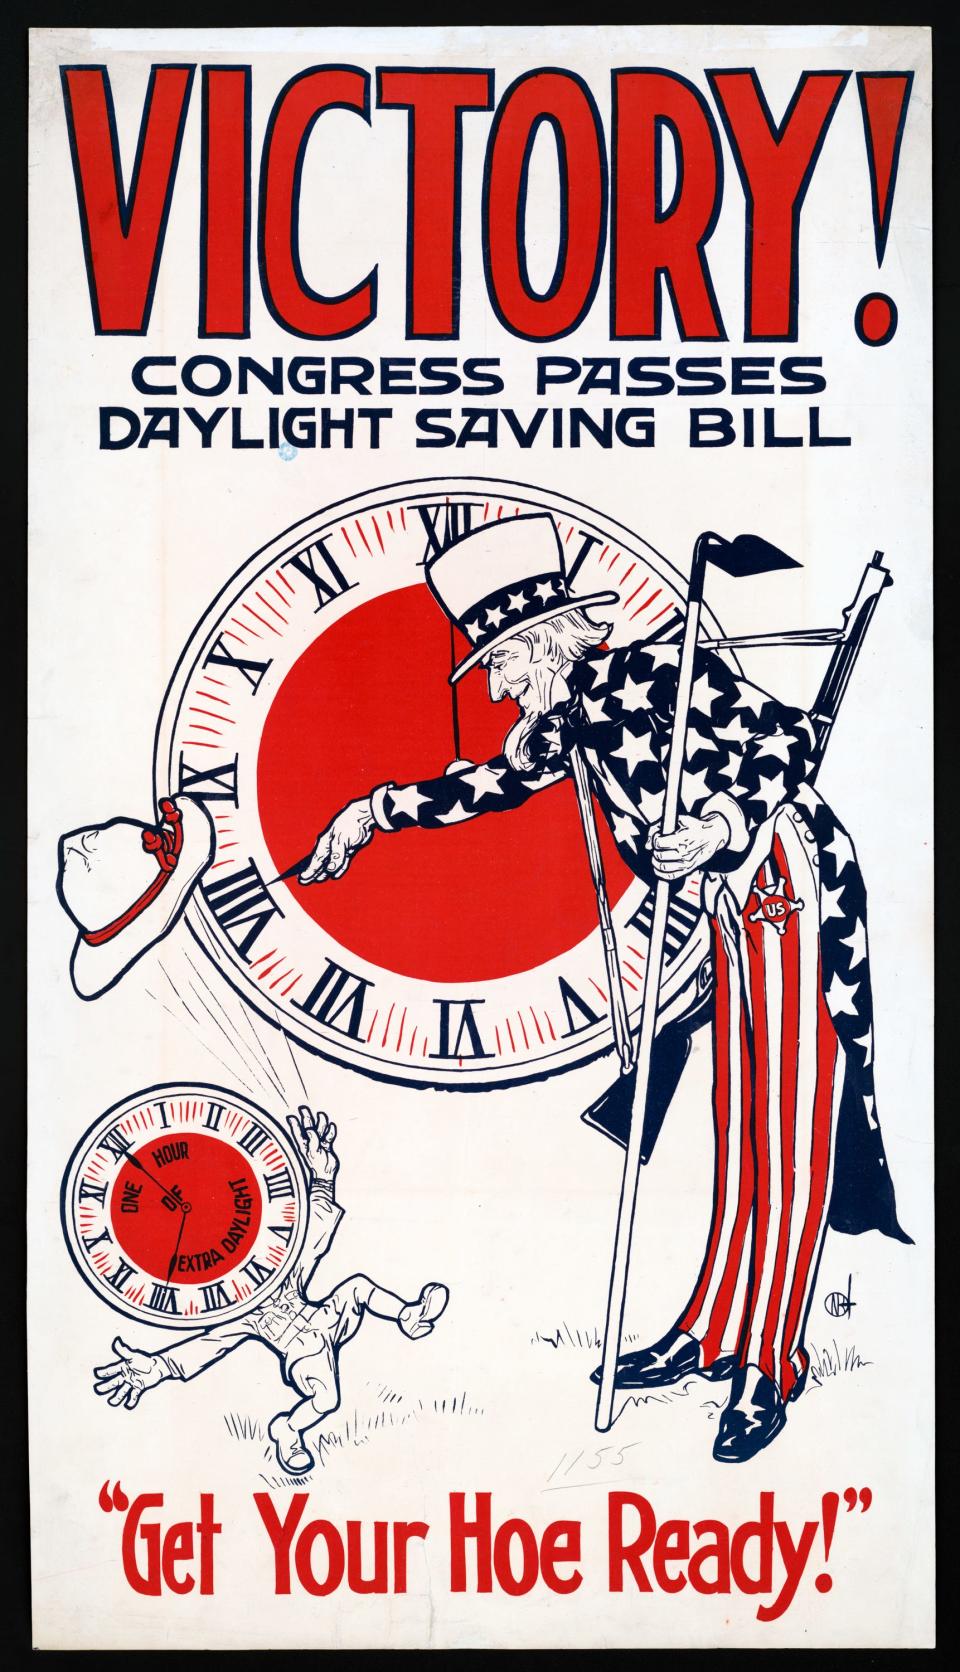 1918 poster celebrating passage of the daylight saving time bill.